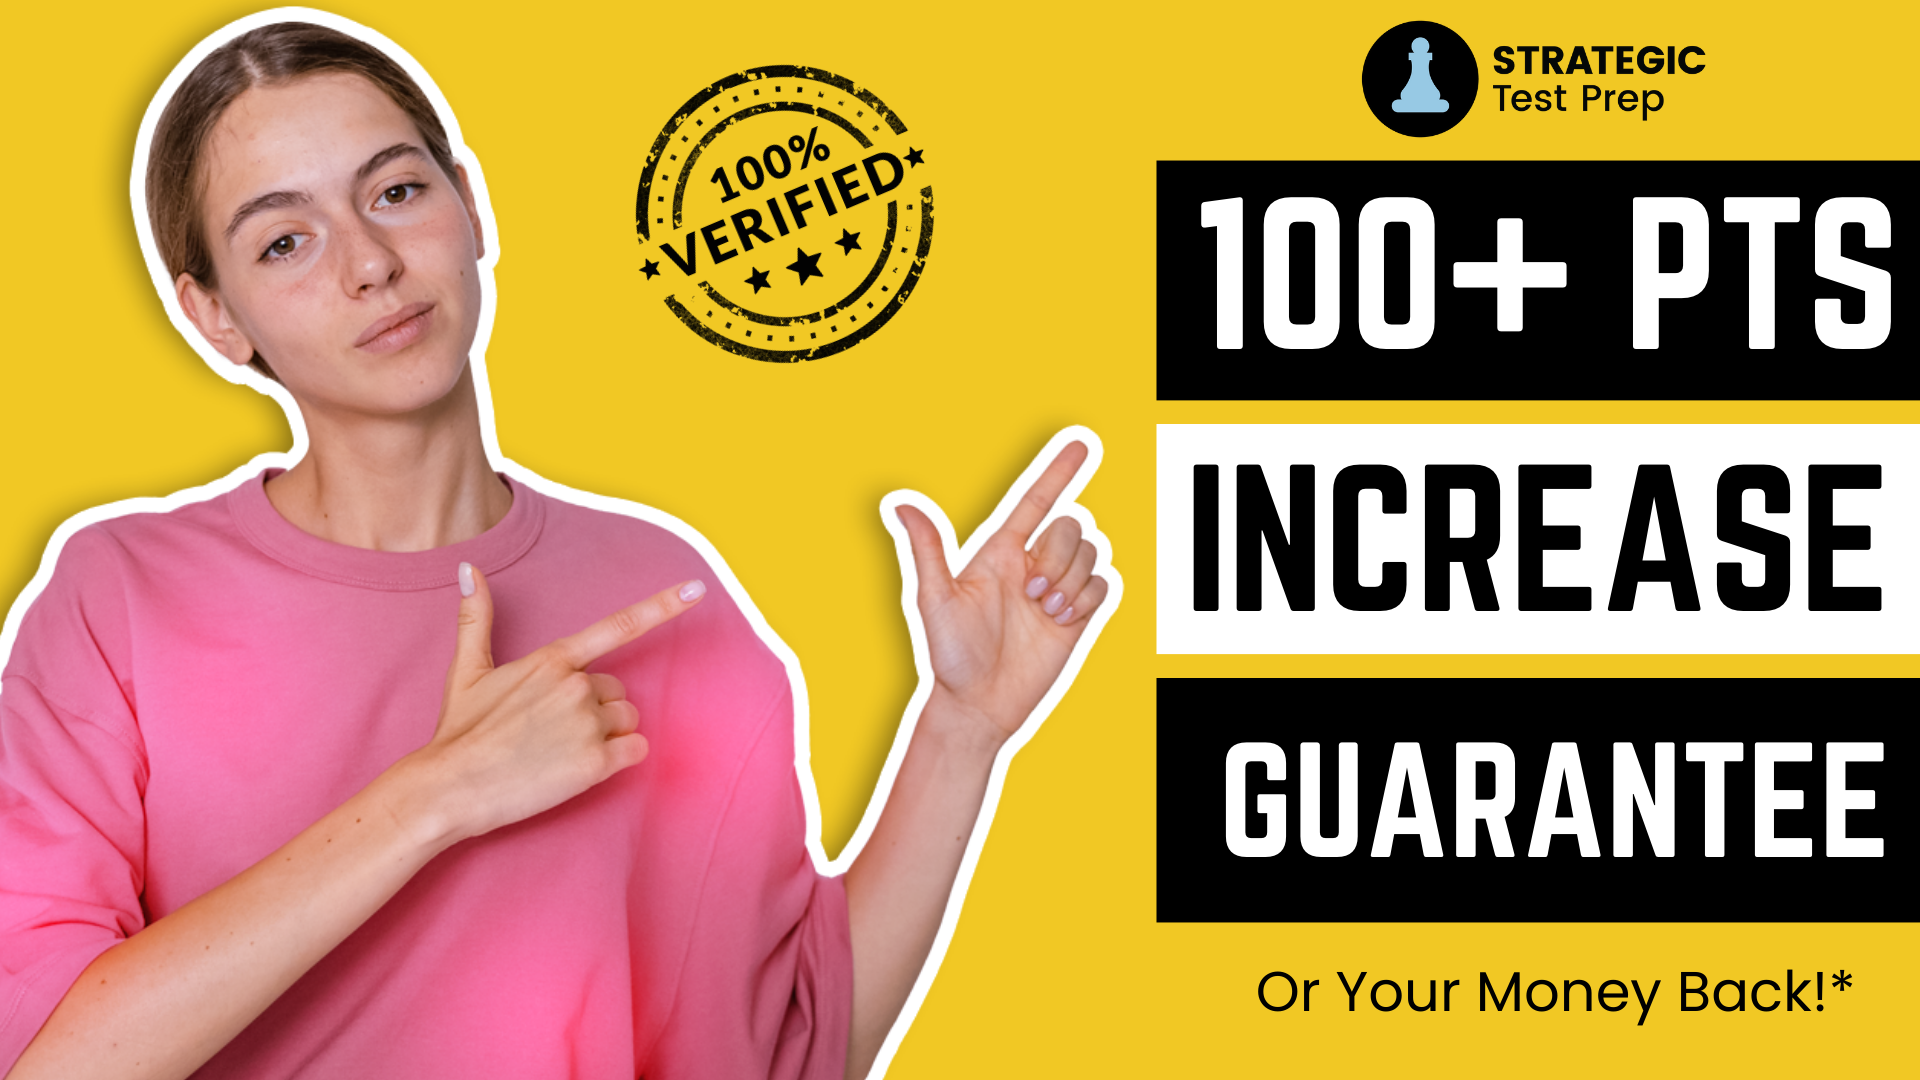 100+ Score Improvement on Digital SAT English Guarantee or Your Money Back